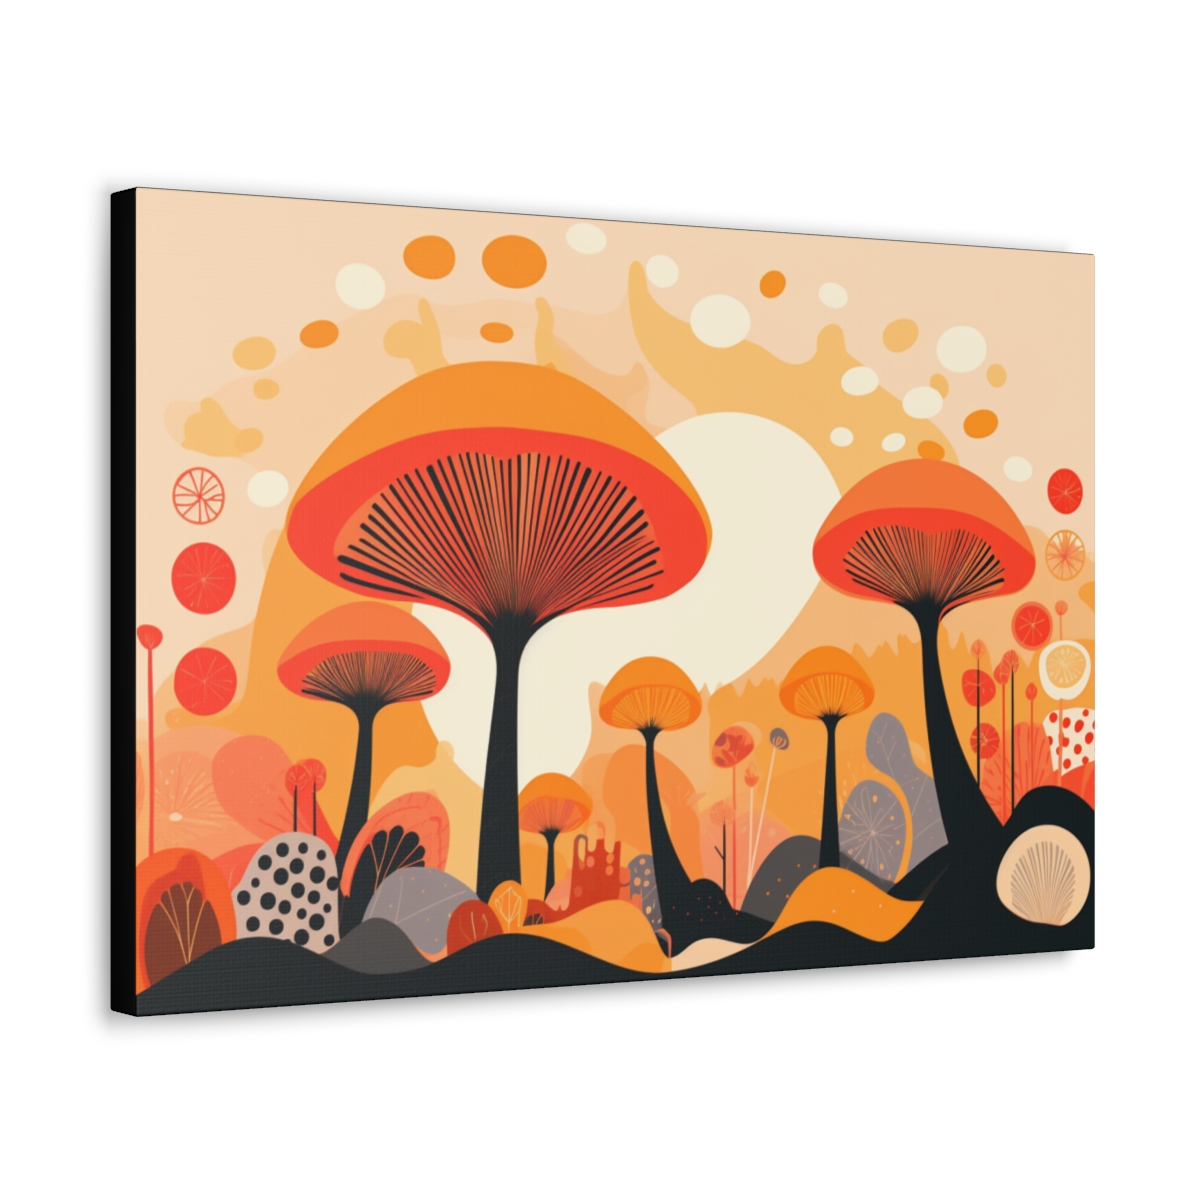 Vintage Mushroom Art: A Trippy Forest